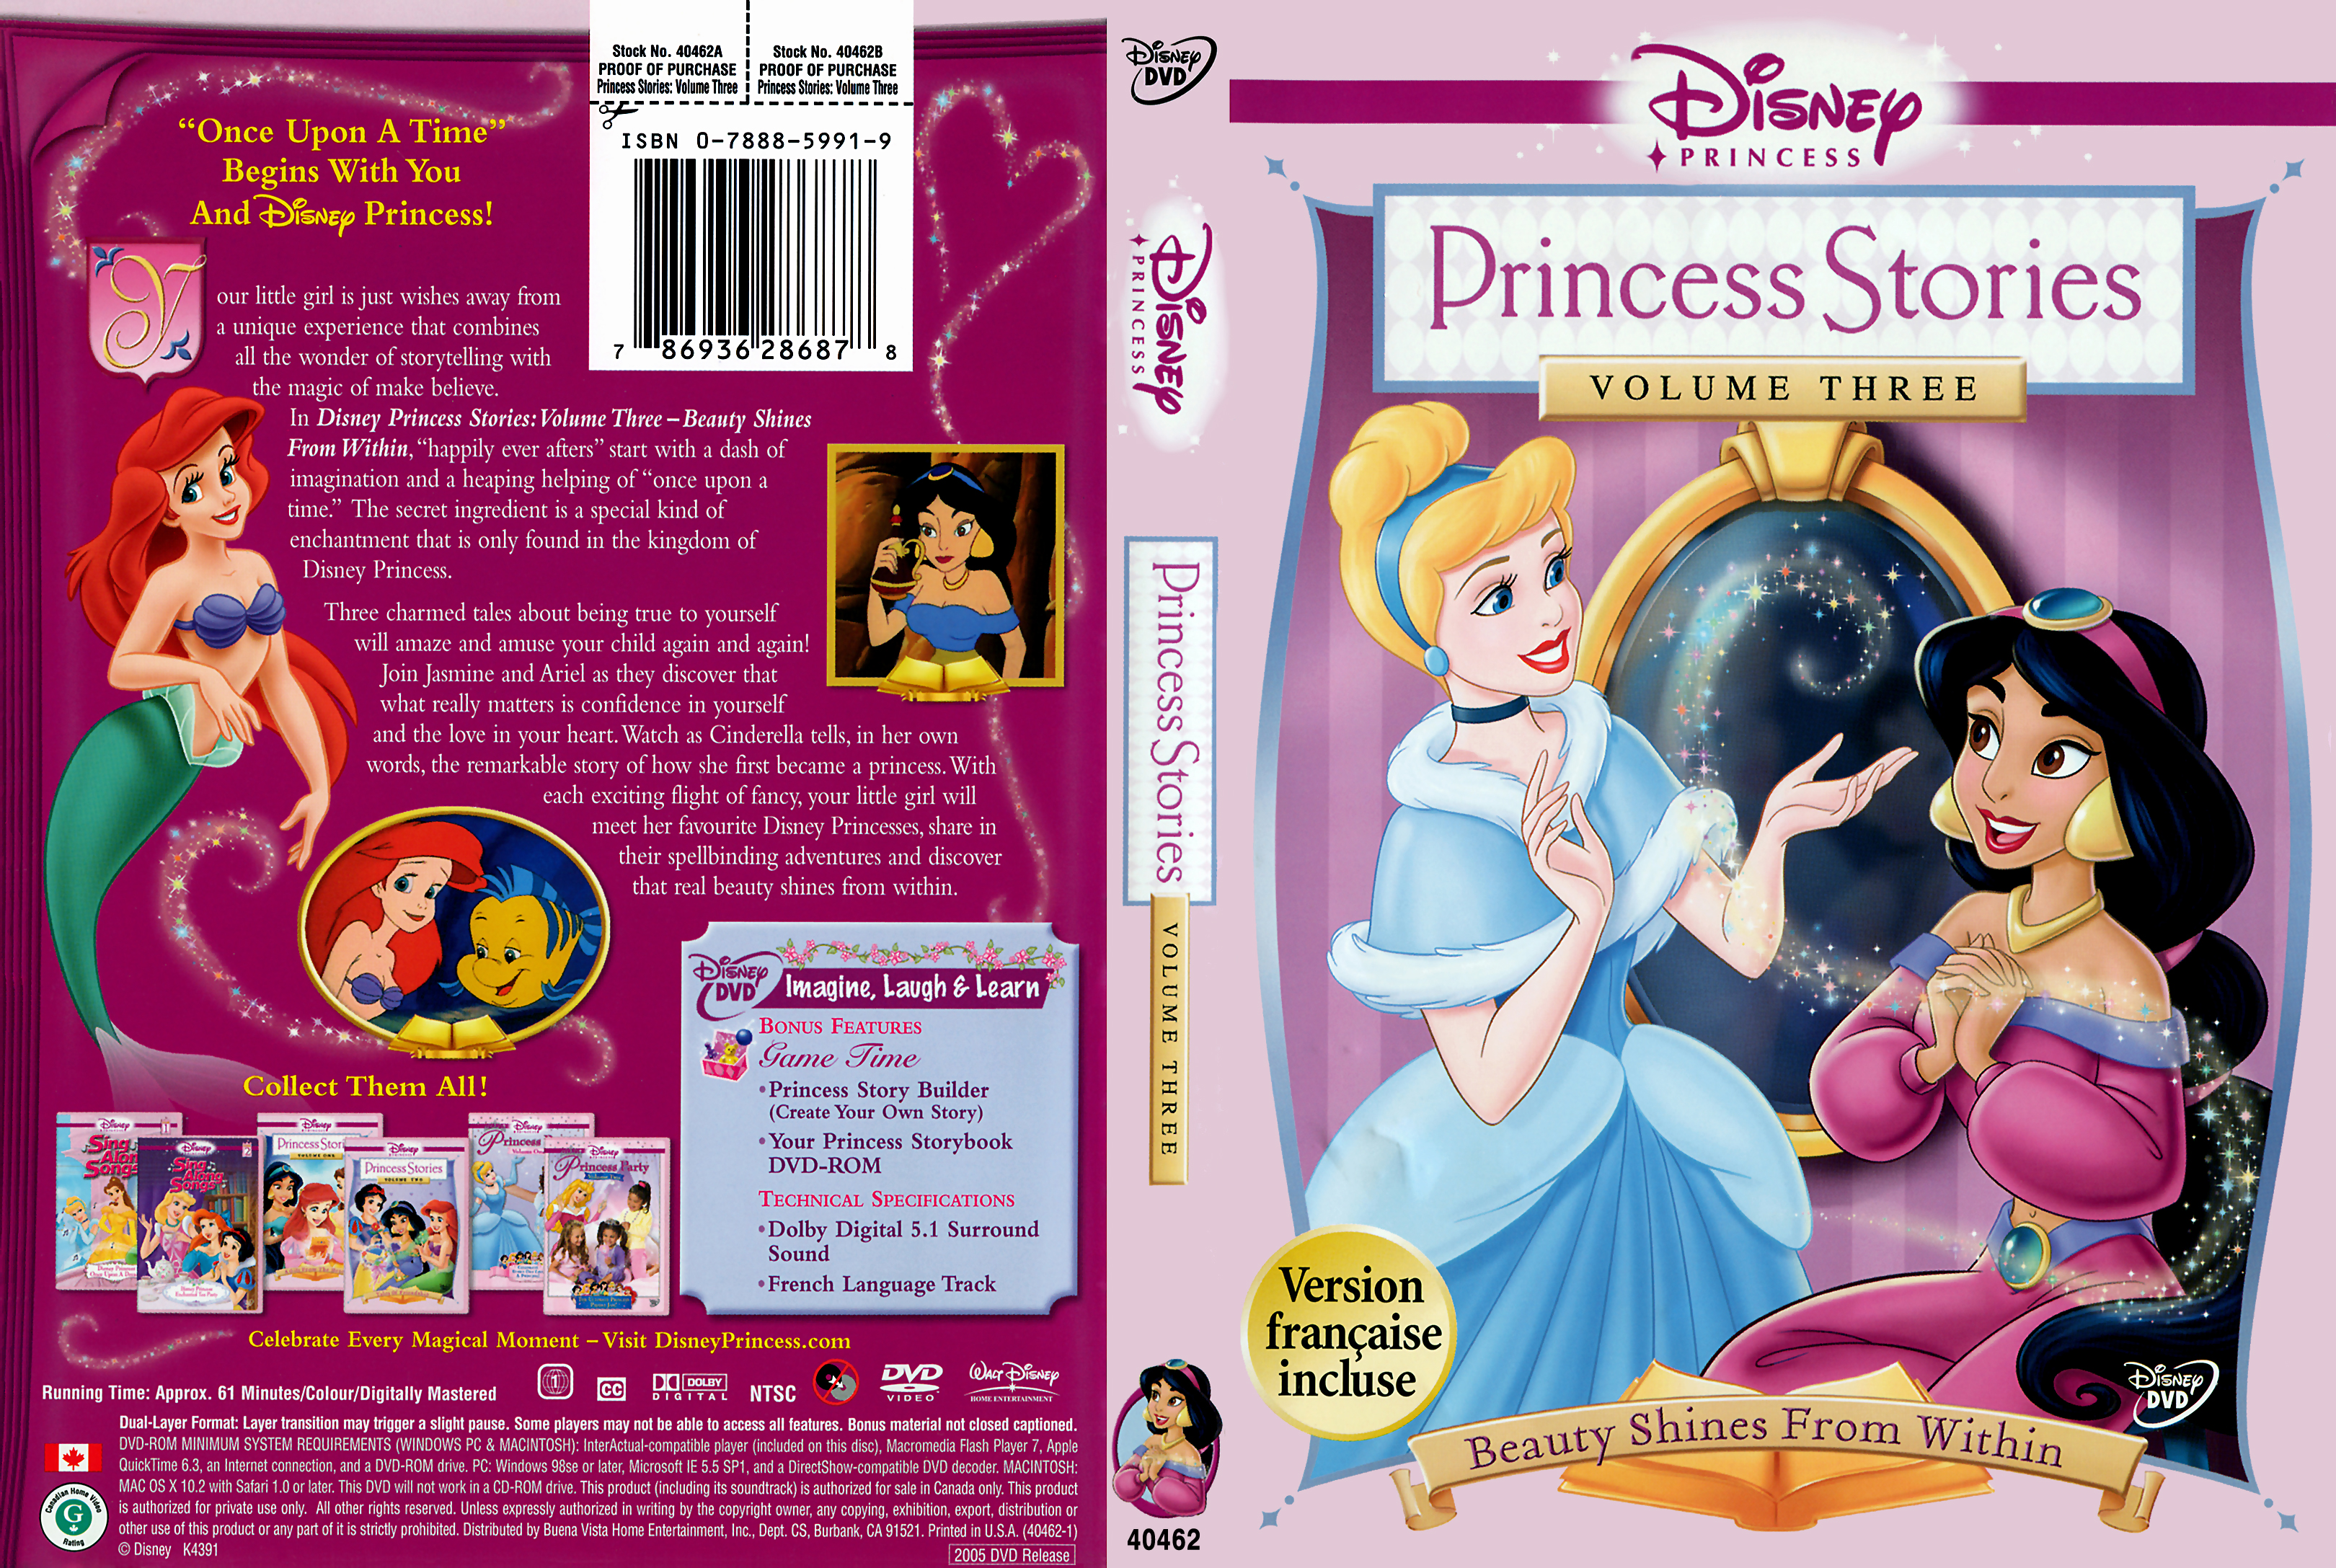 Disney Princess Stories Vol 3 DVD Covers Cover Century